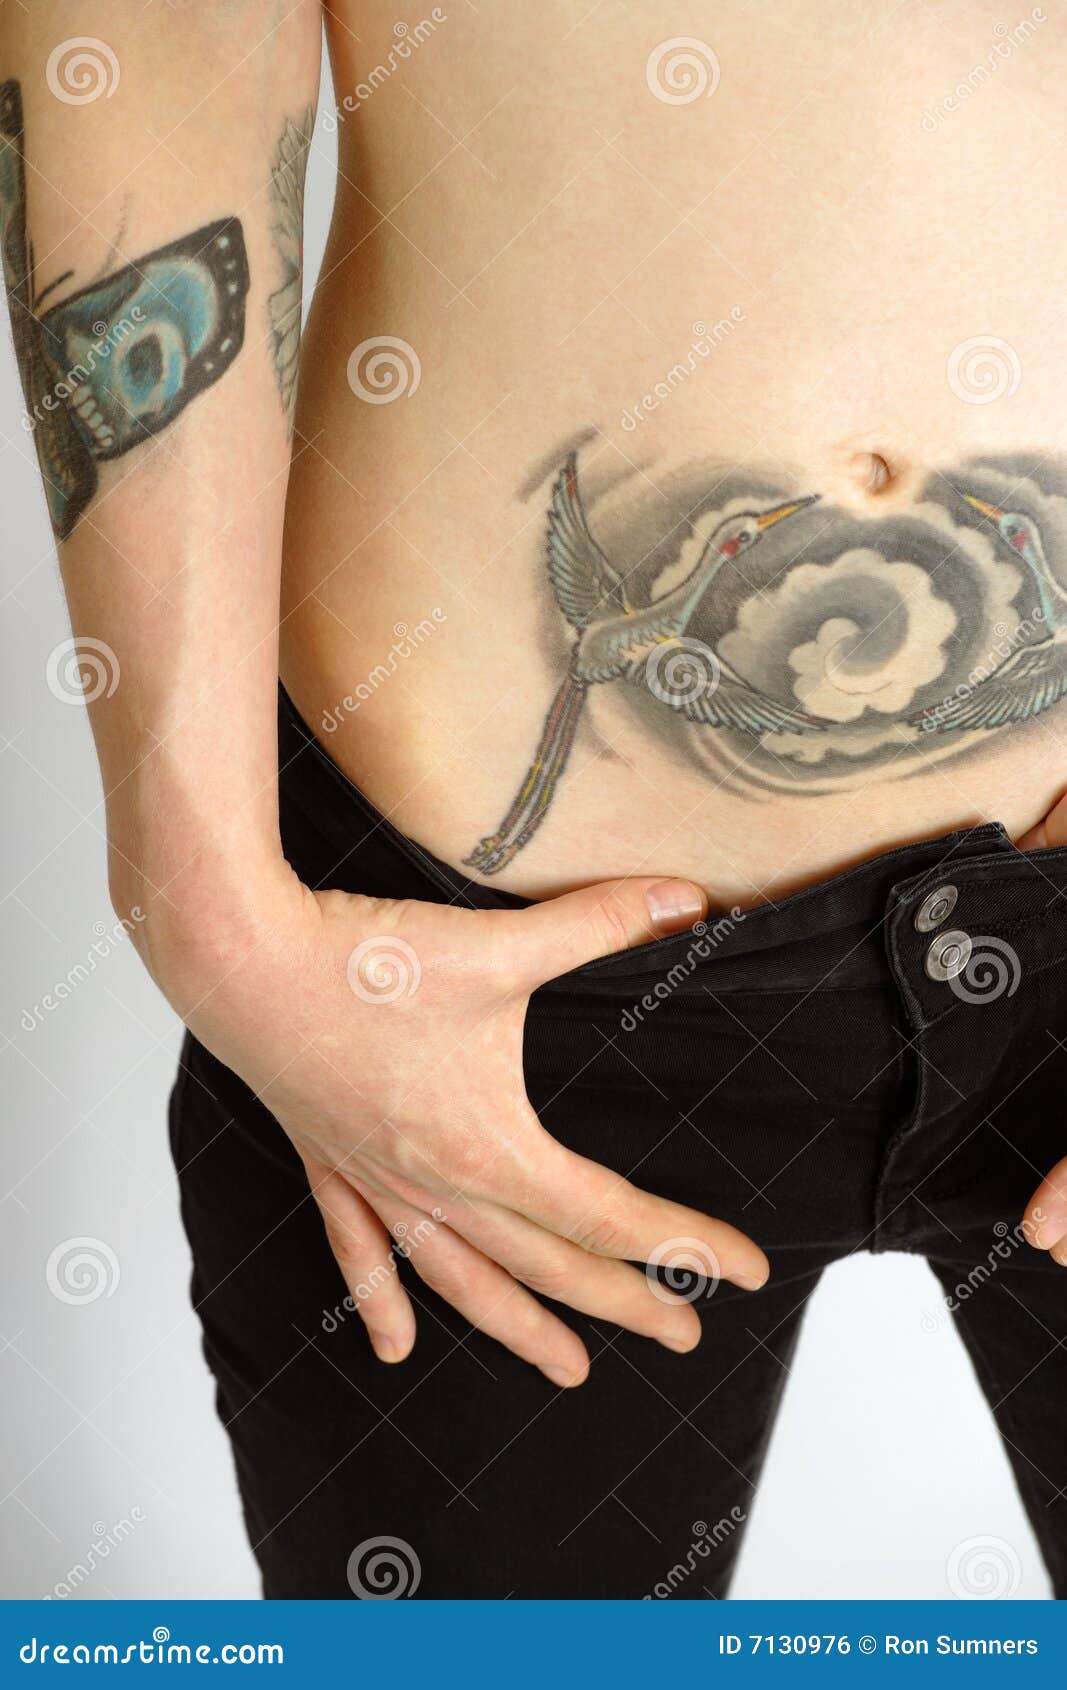 Stomach tattoo stock photo. Image of feminine, person - 7130976